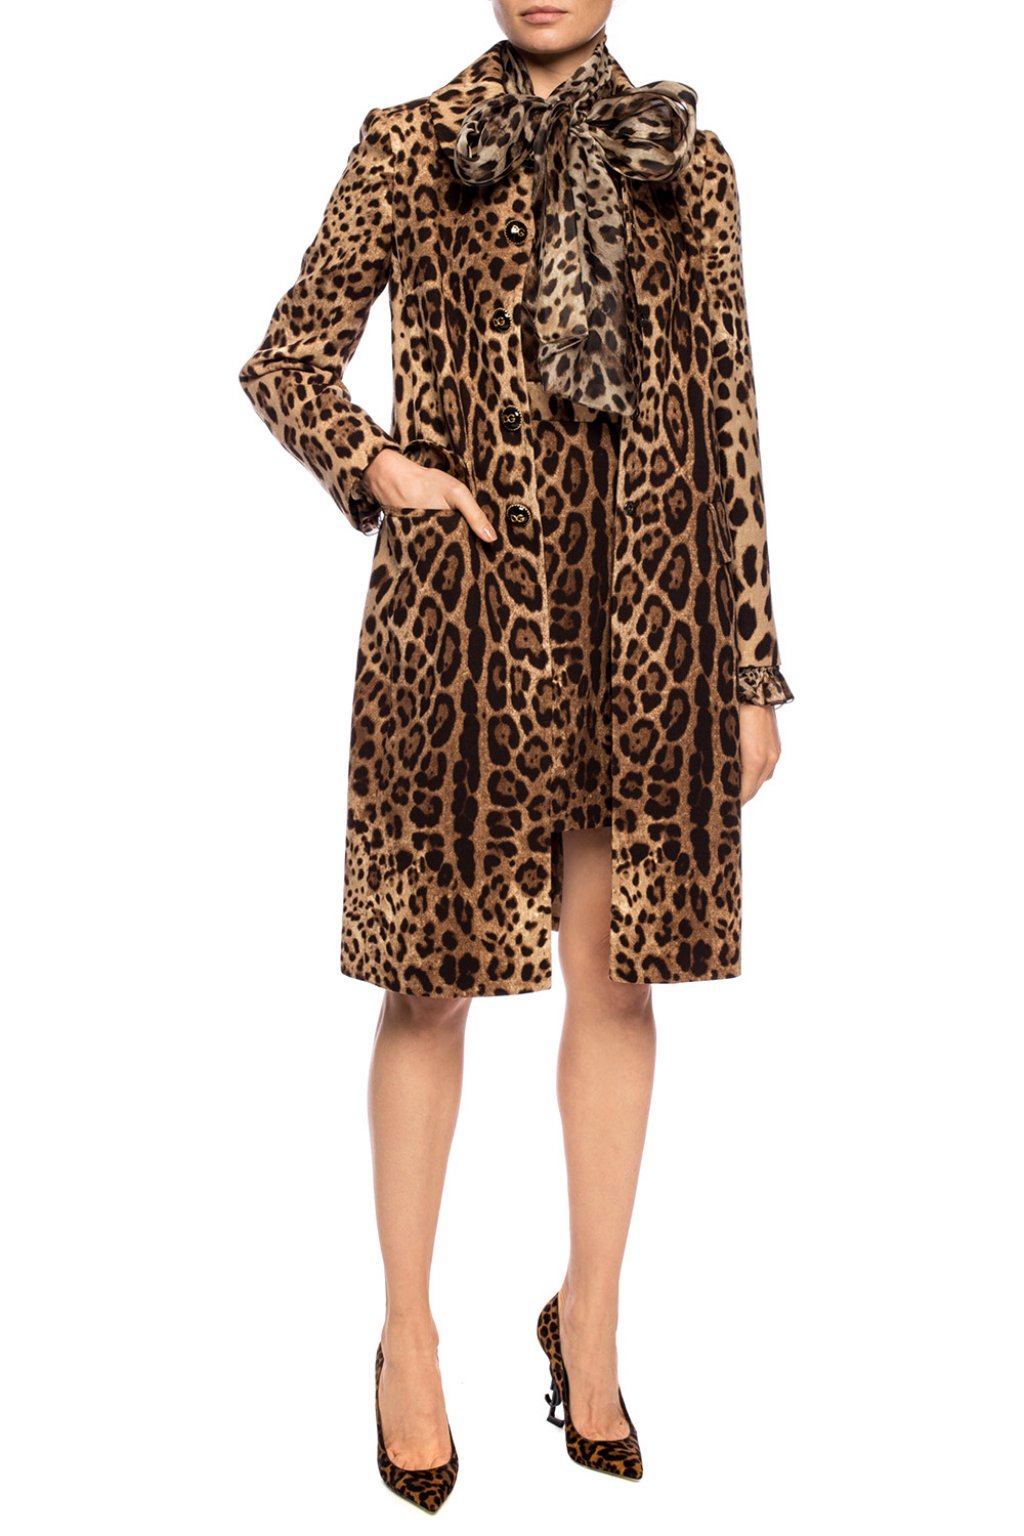 Leopard print skirt Dolce & Gabbana - Vitkac Singapore